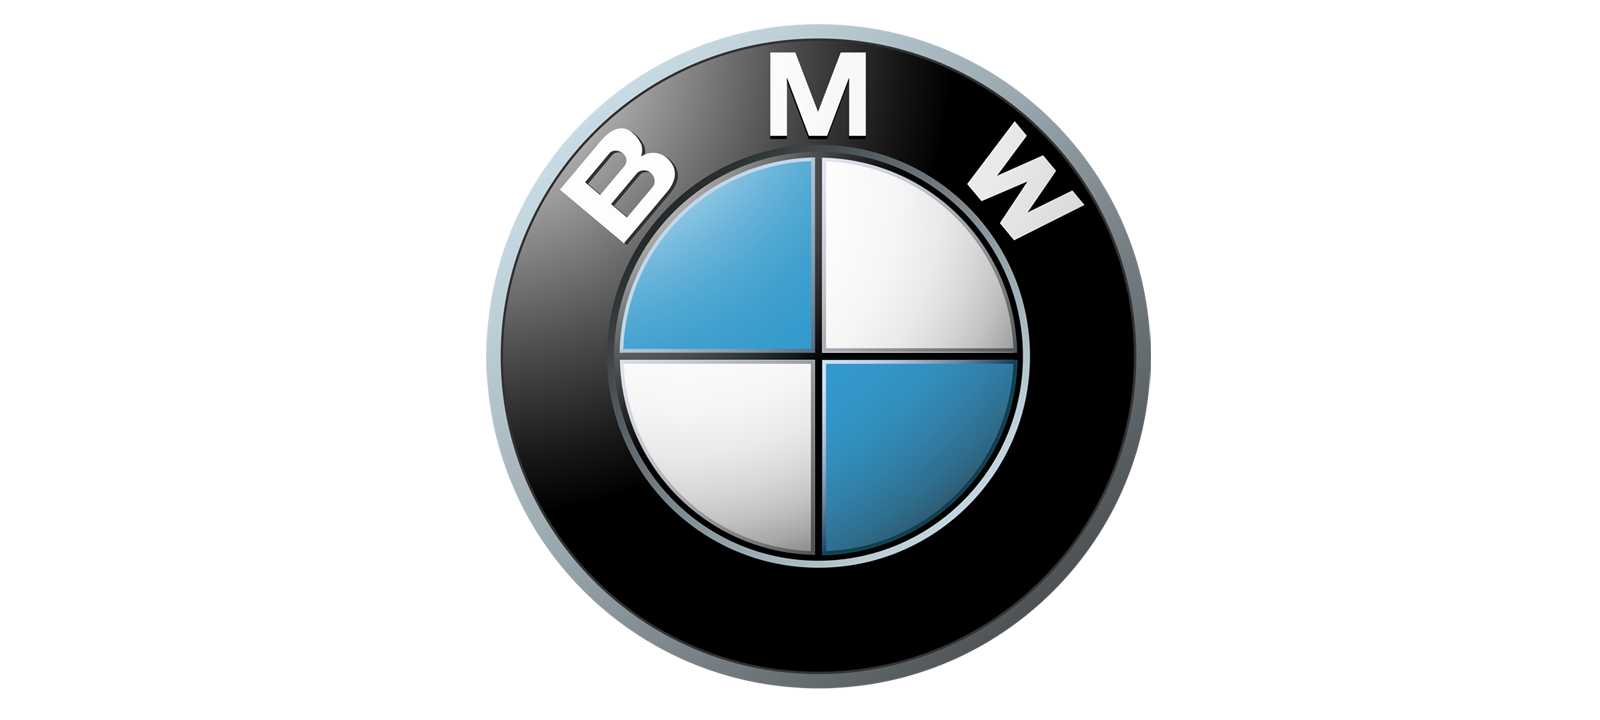 Logo bmw